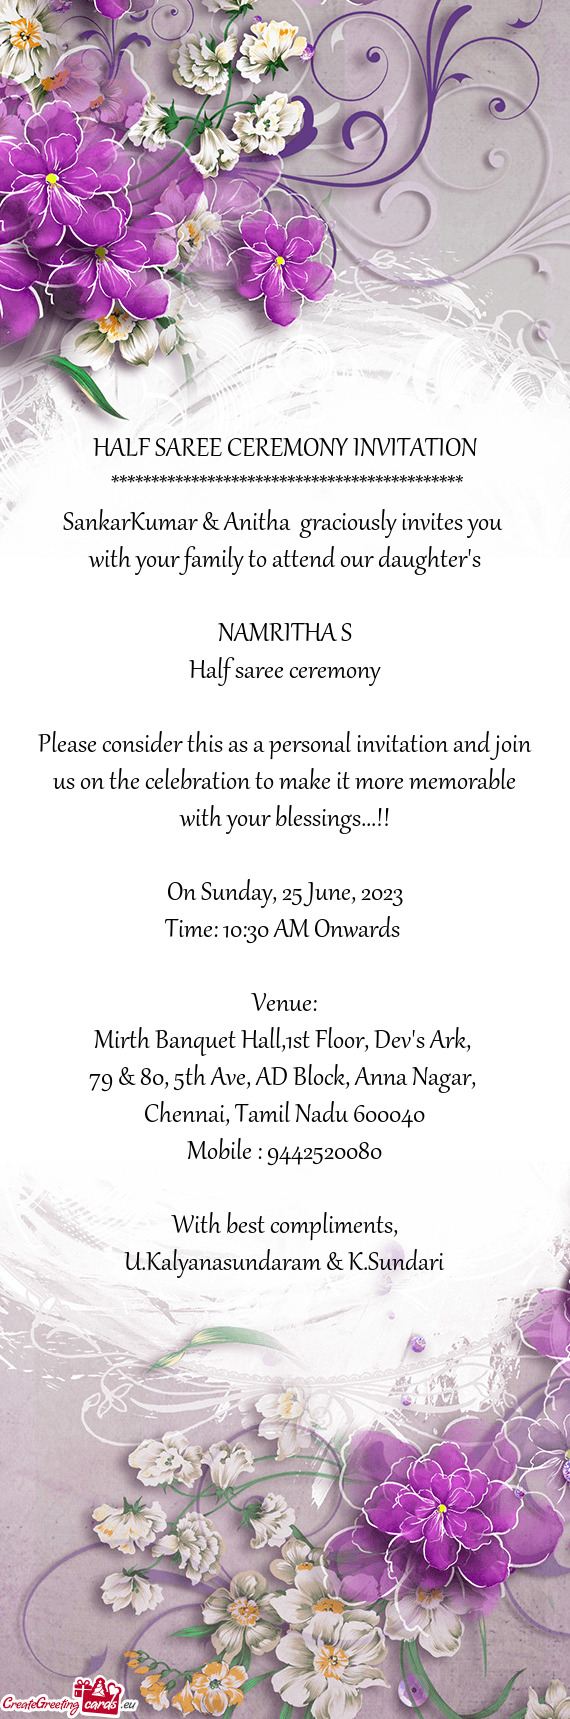 SankarKumar & Anitha graciously invites you